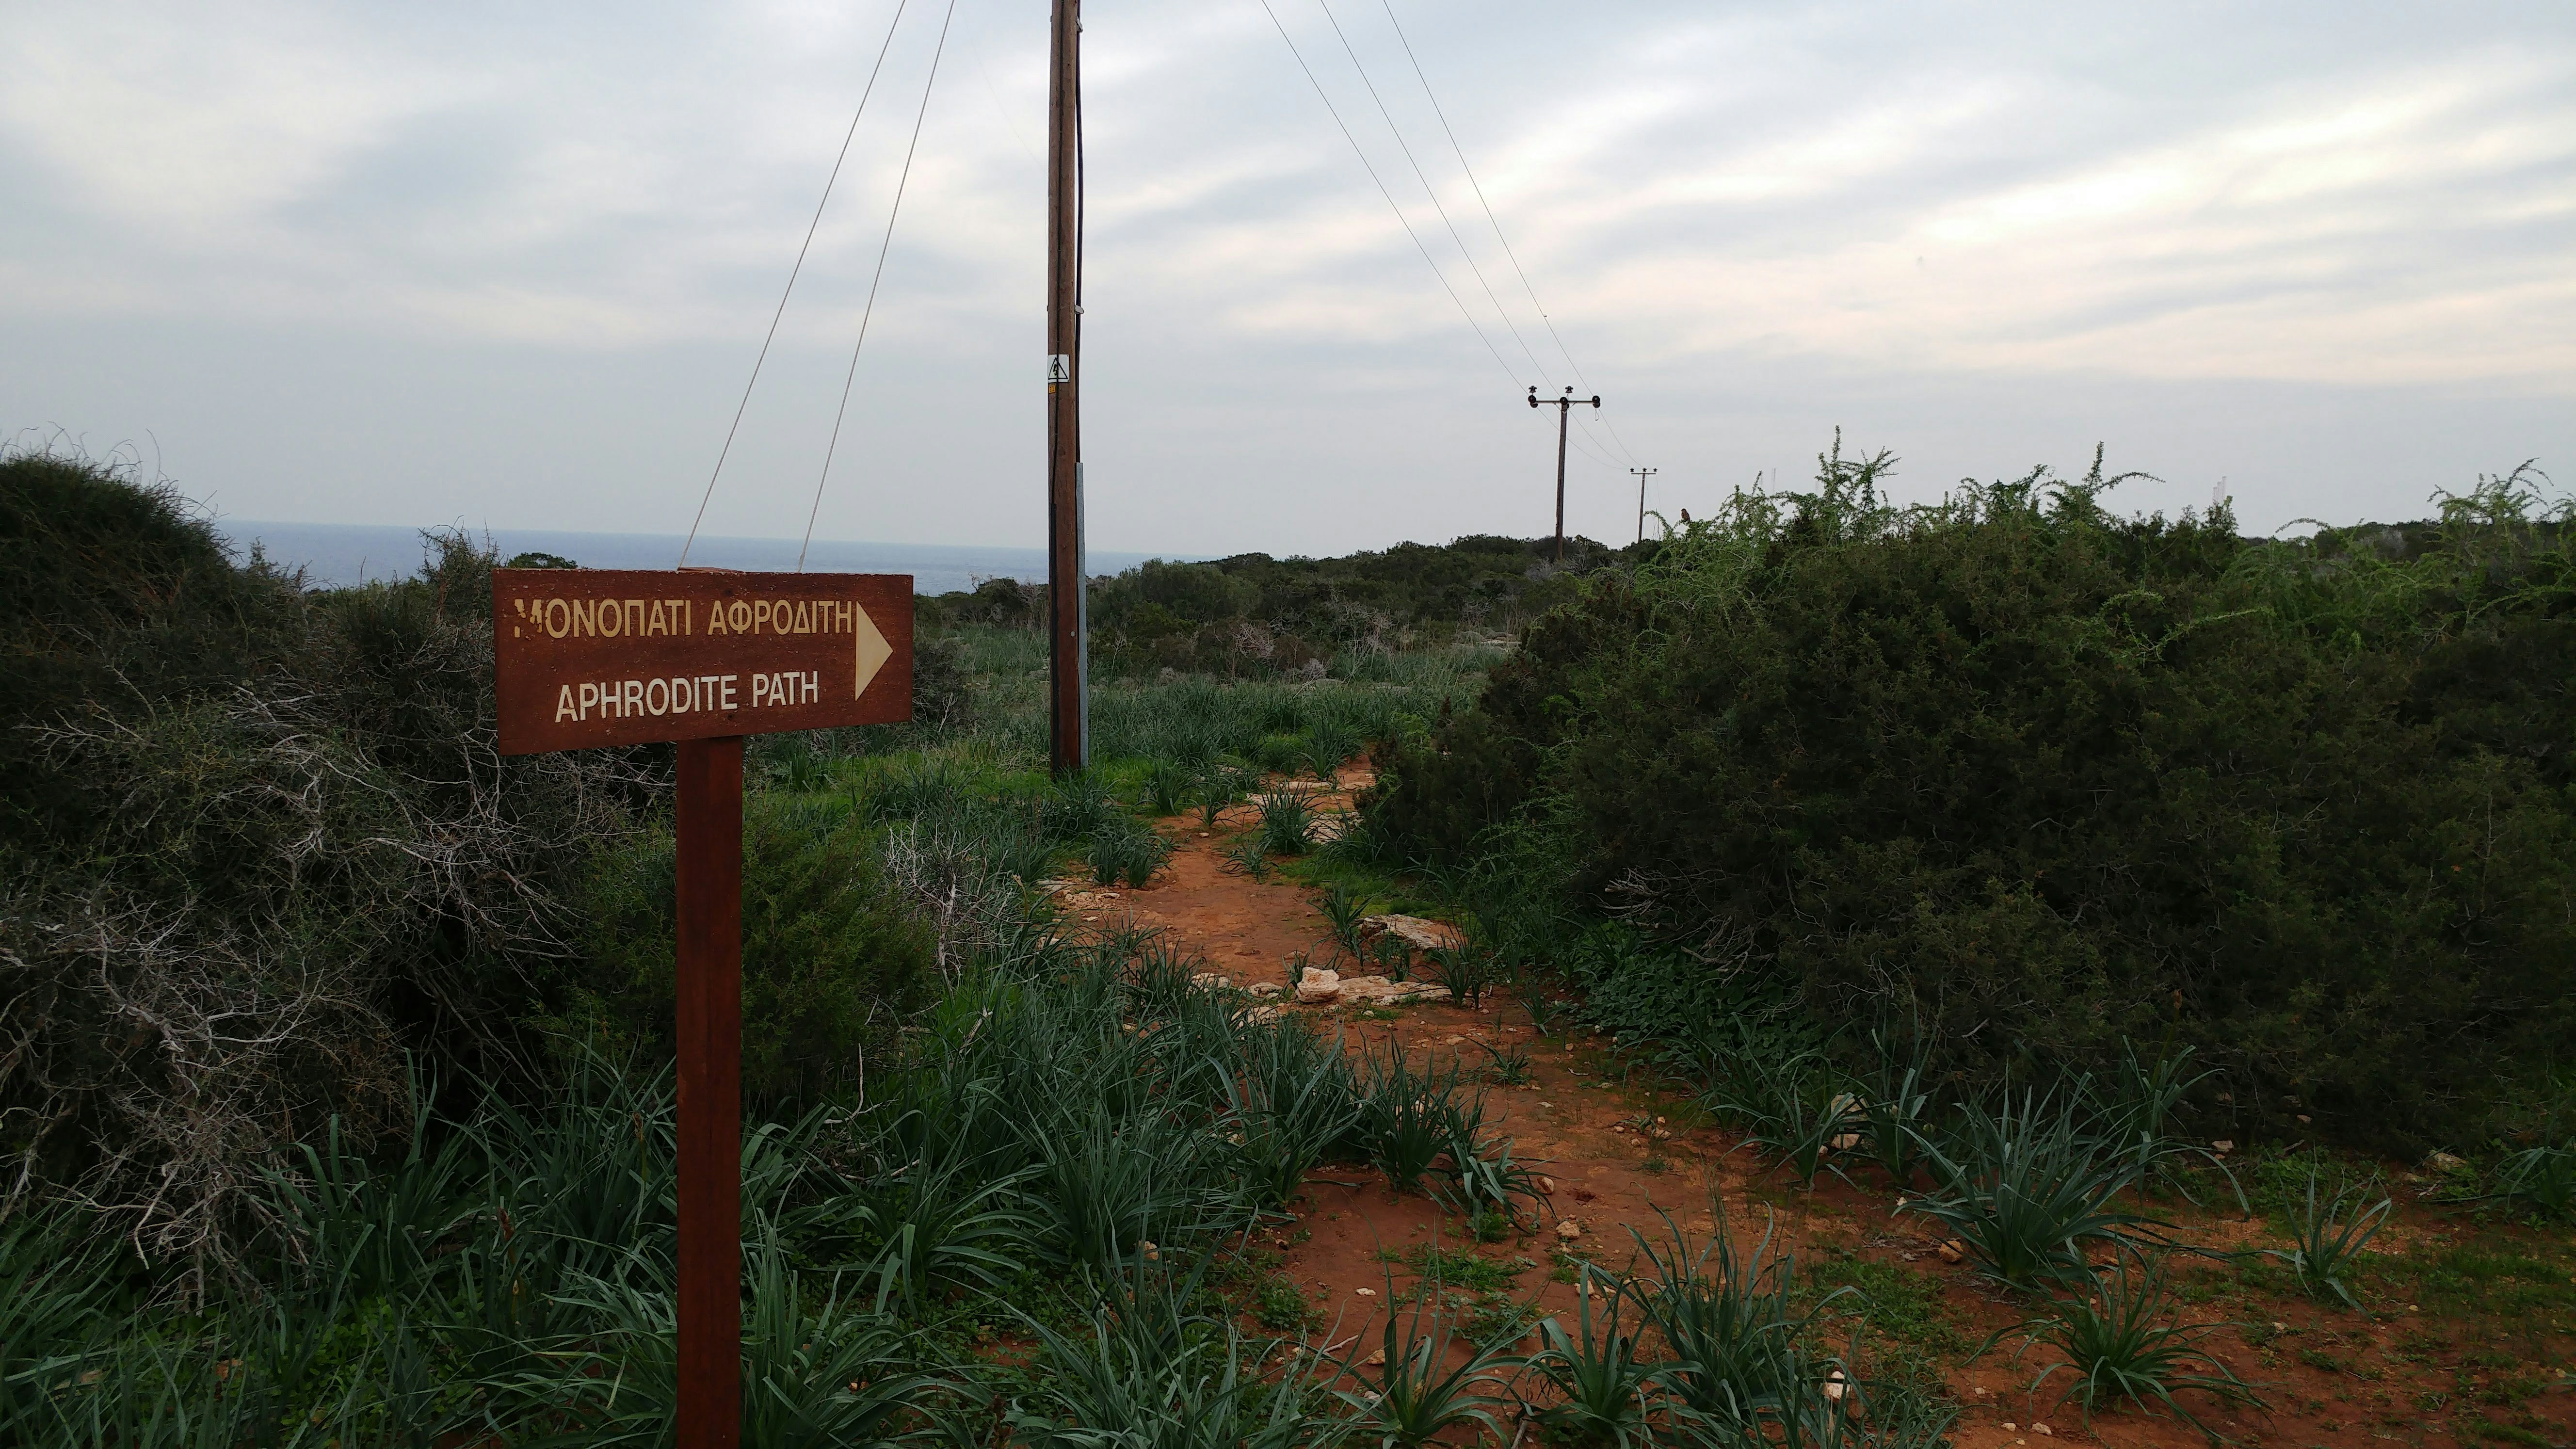 Signpost on the aphrodite path, Ayia Napa, Cyprus.